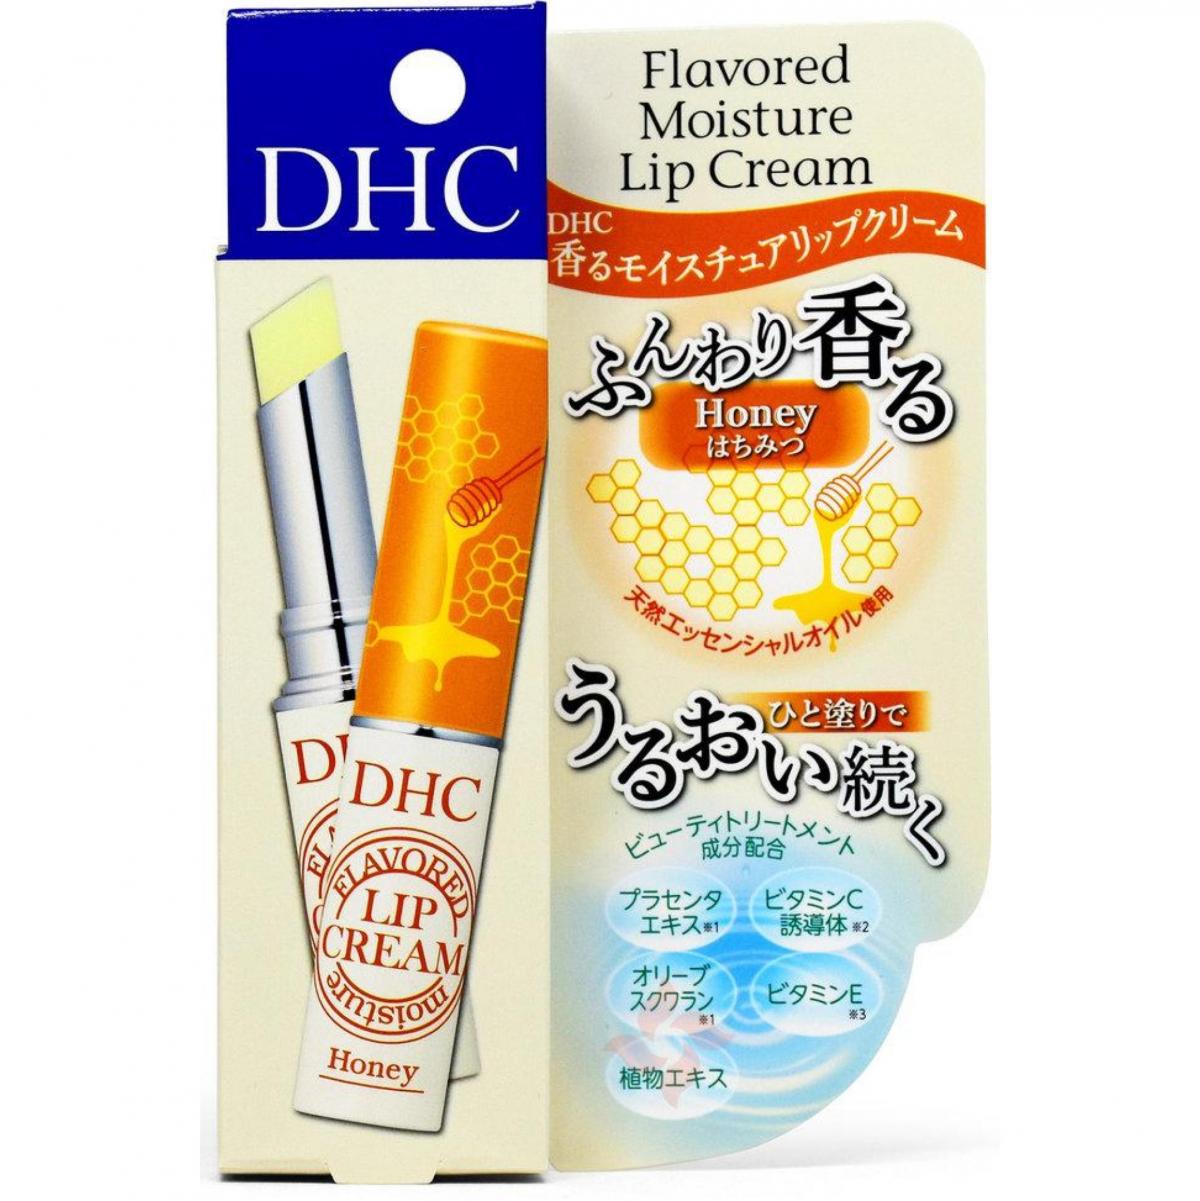 Flavored Moisture Lip Cream (Honey) 1.5g - 08431 (Parallel Import)